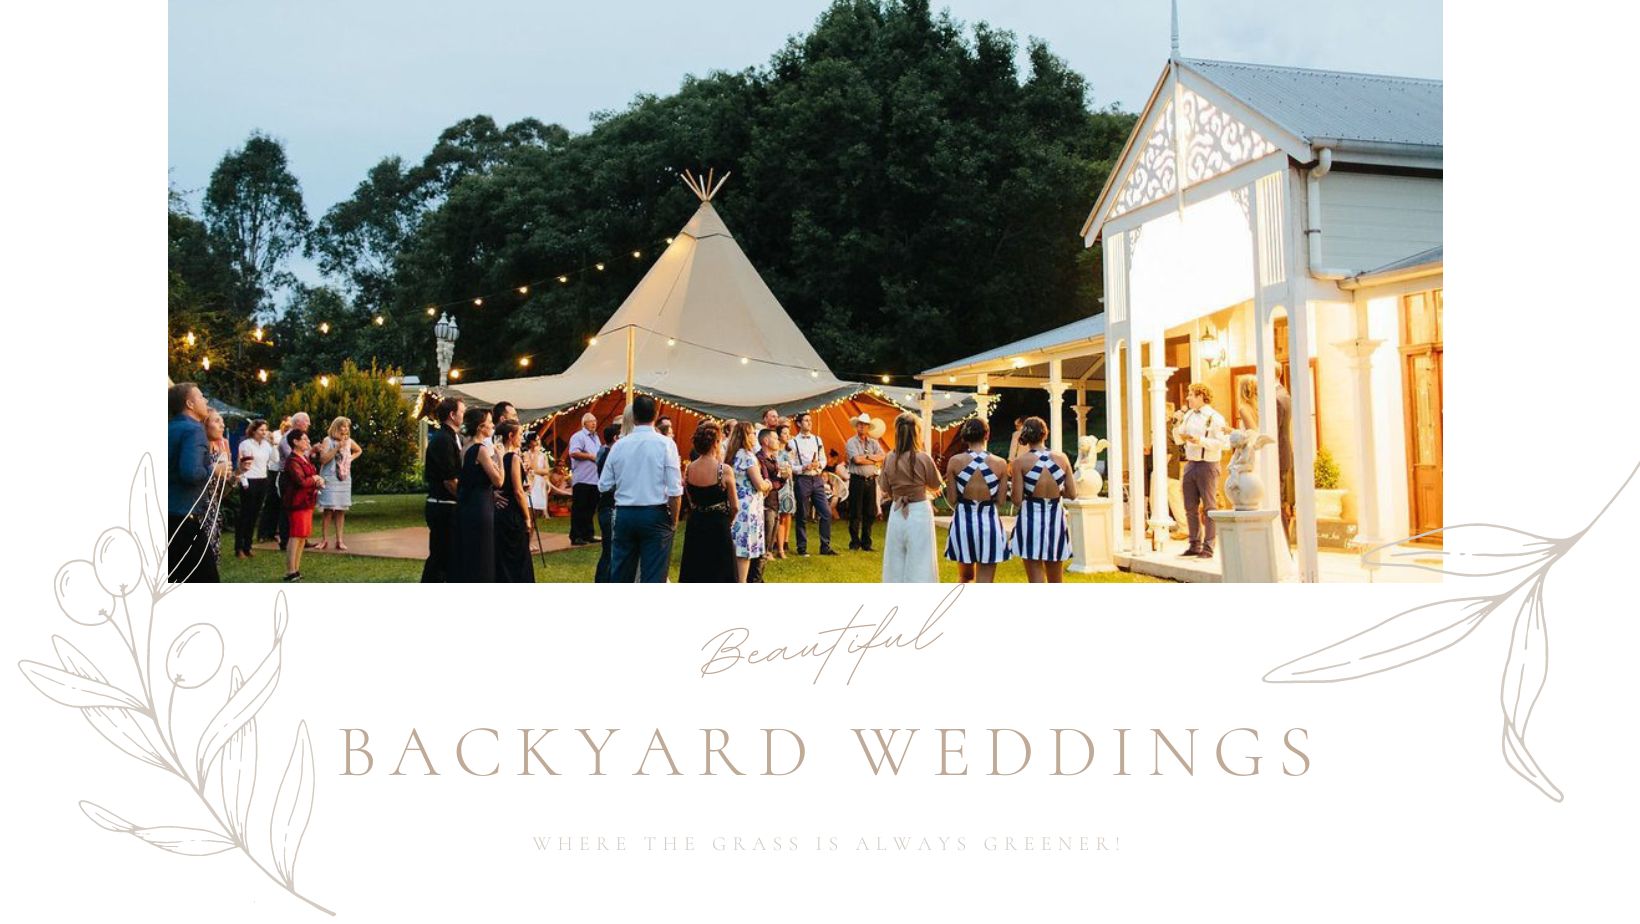 Beautiful backyard wedding ideas